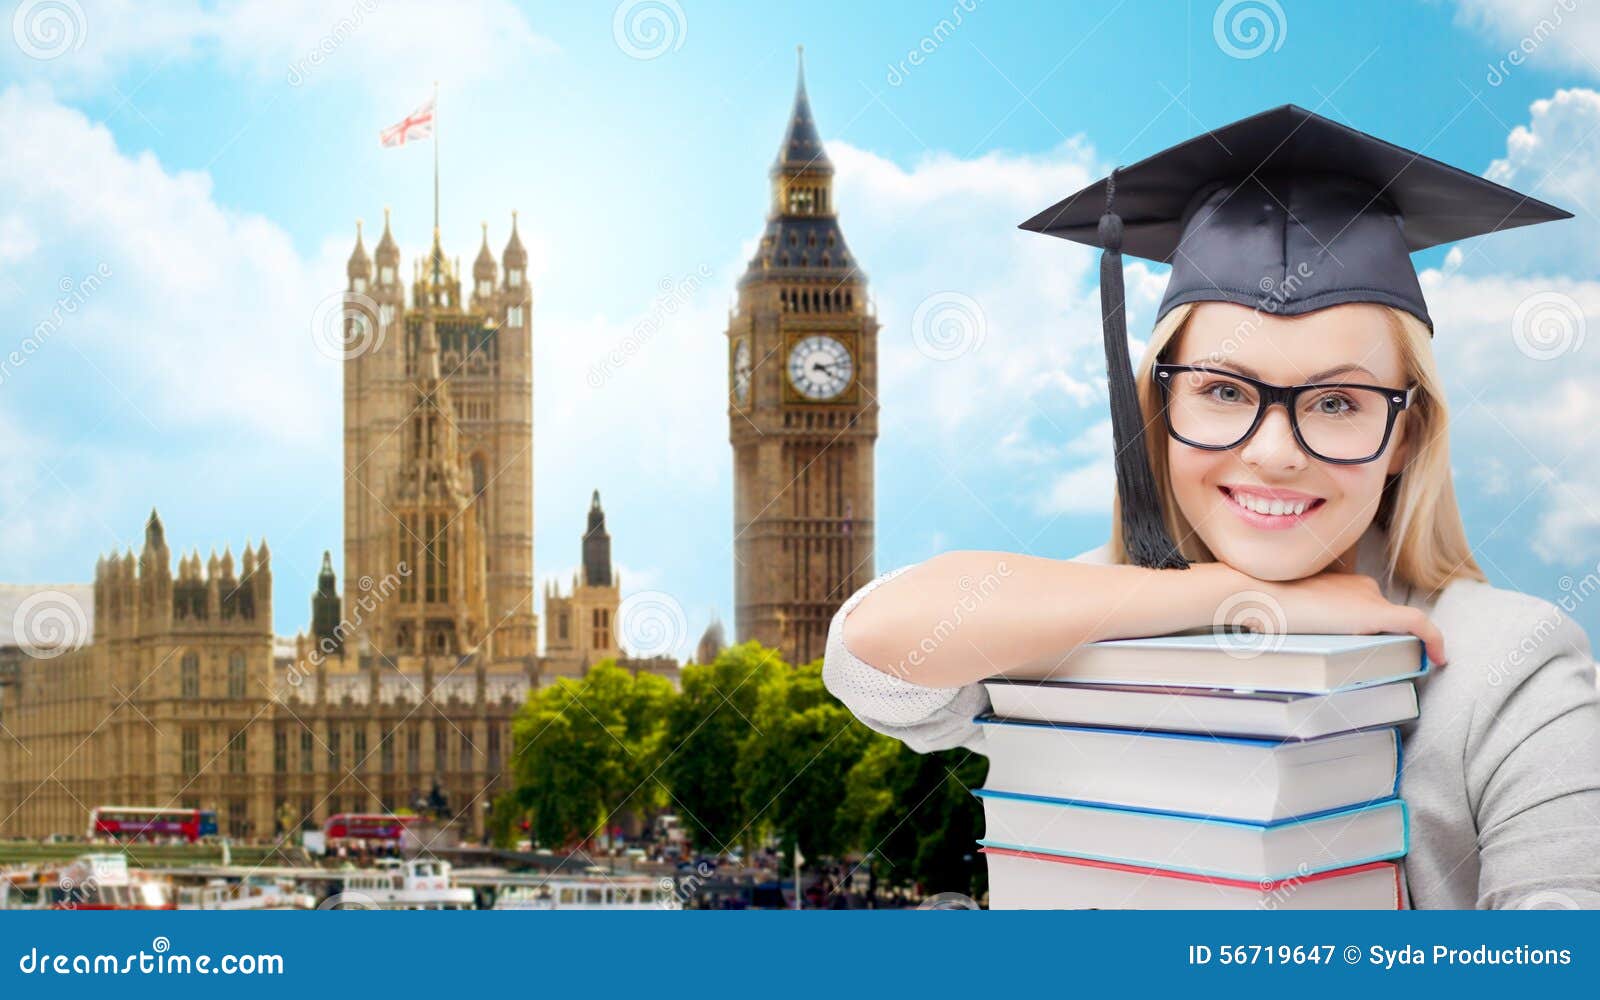 London student